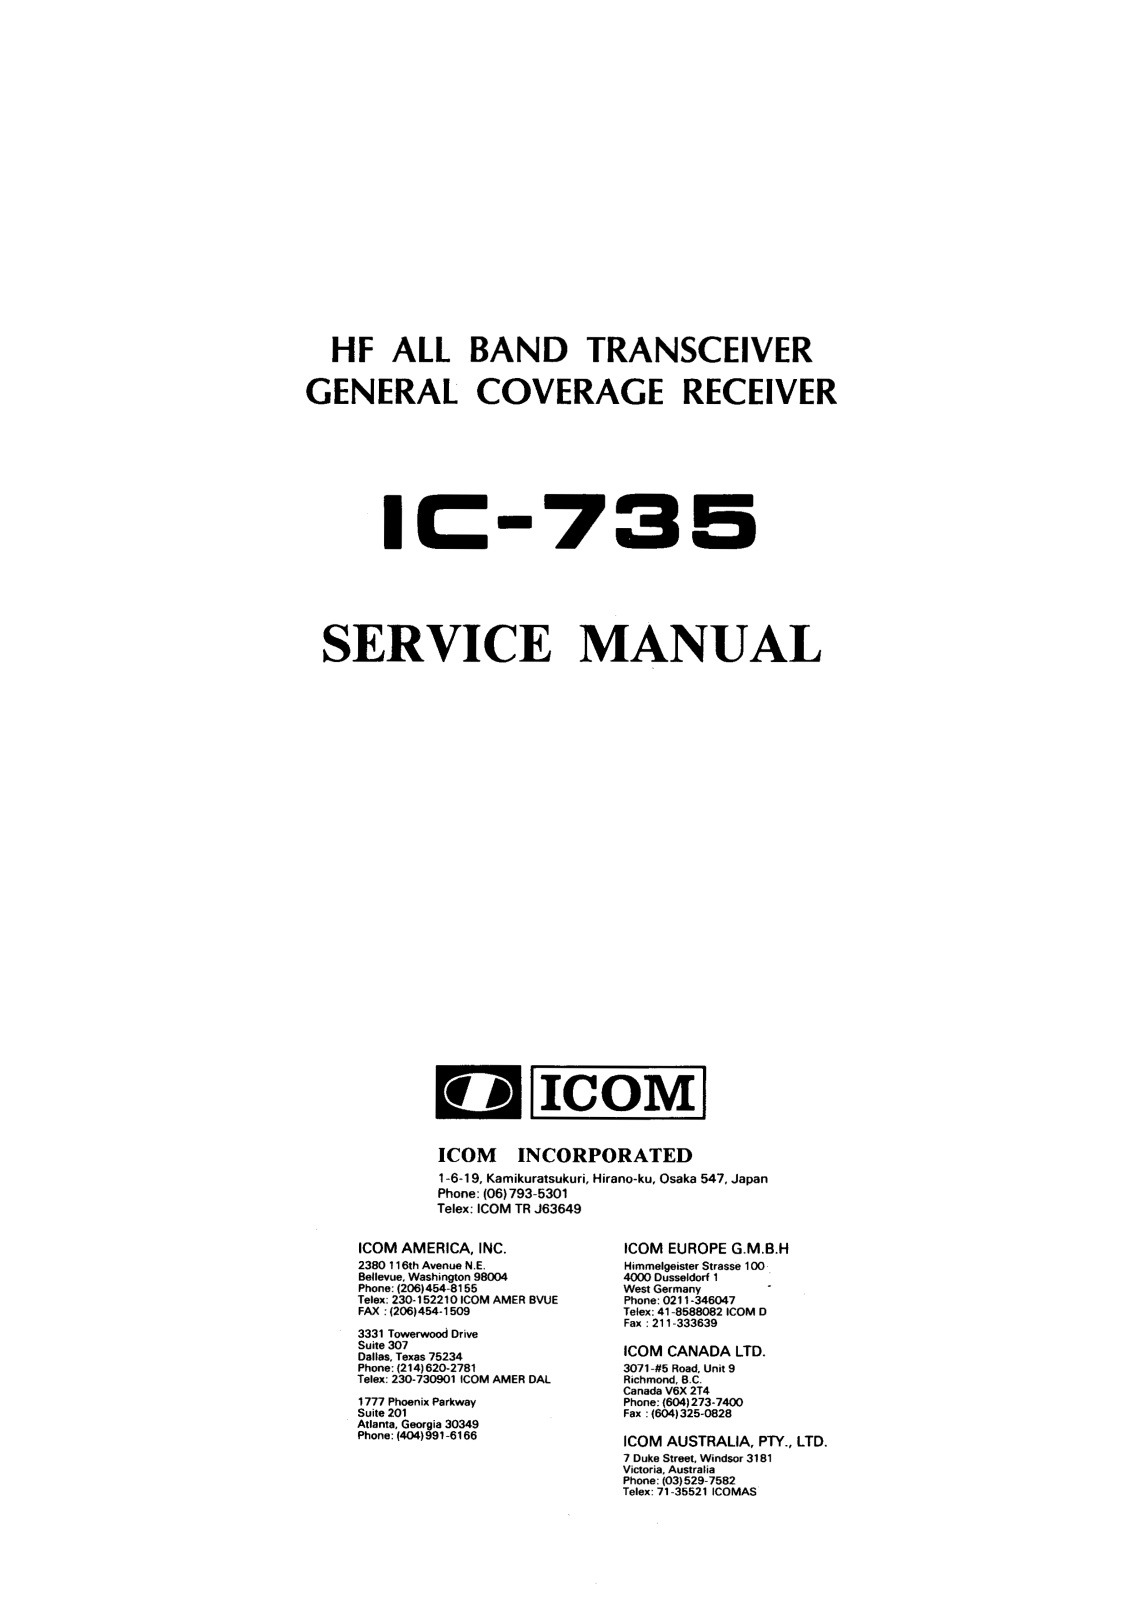 Icom IC-735 Service Manual